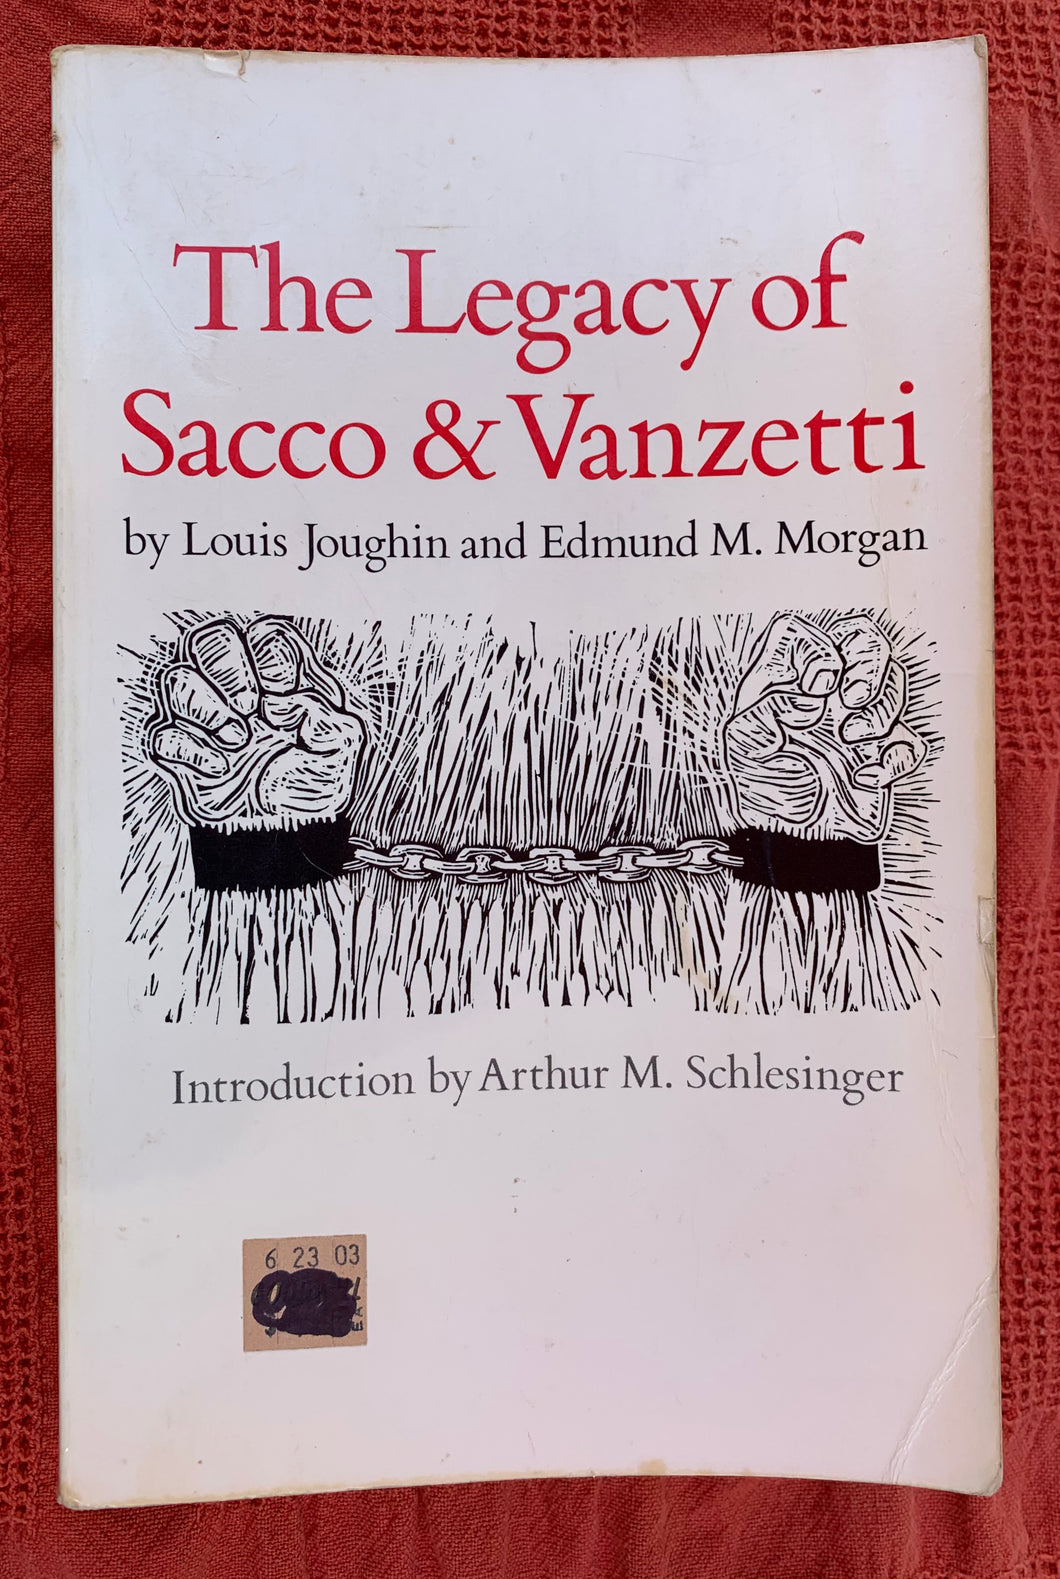 The Legacy of Sacco & Vanzetti